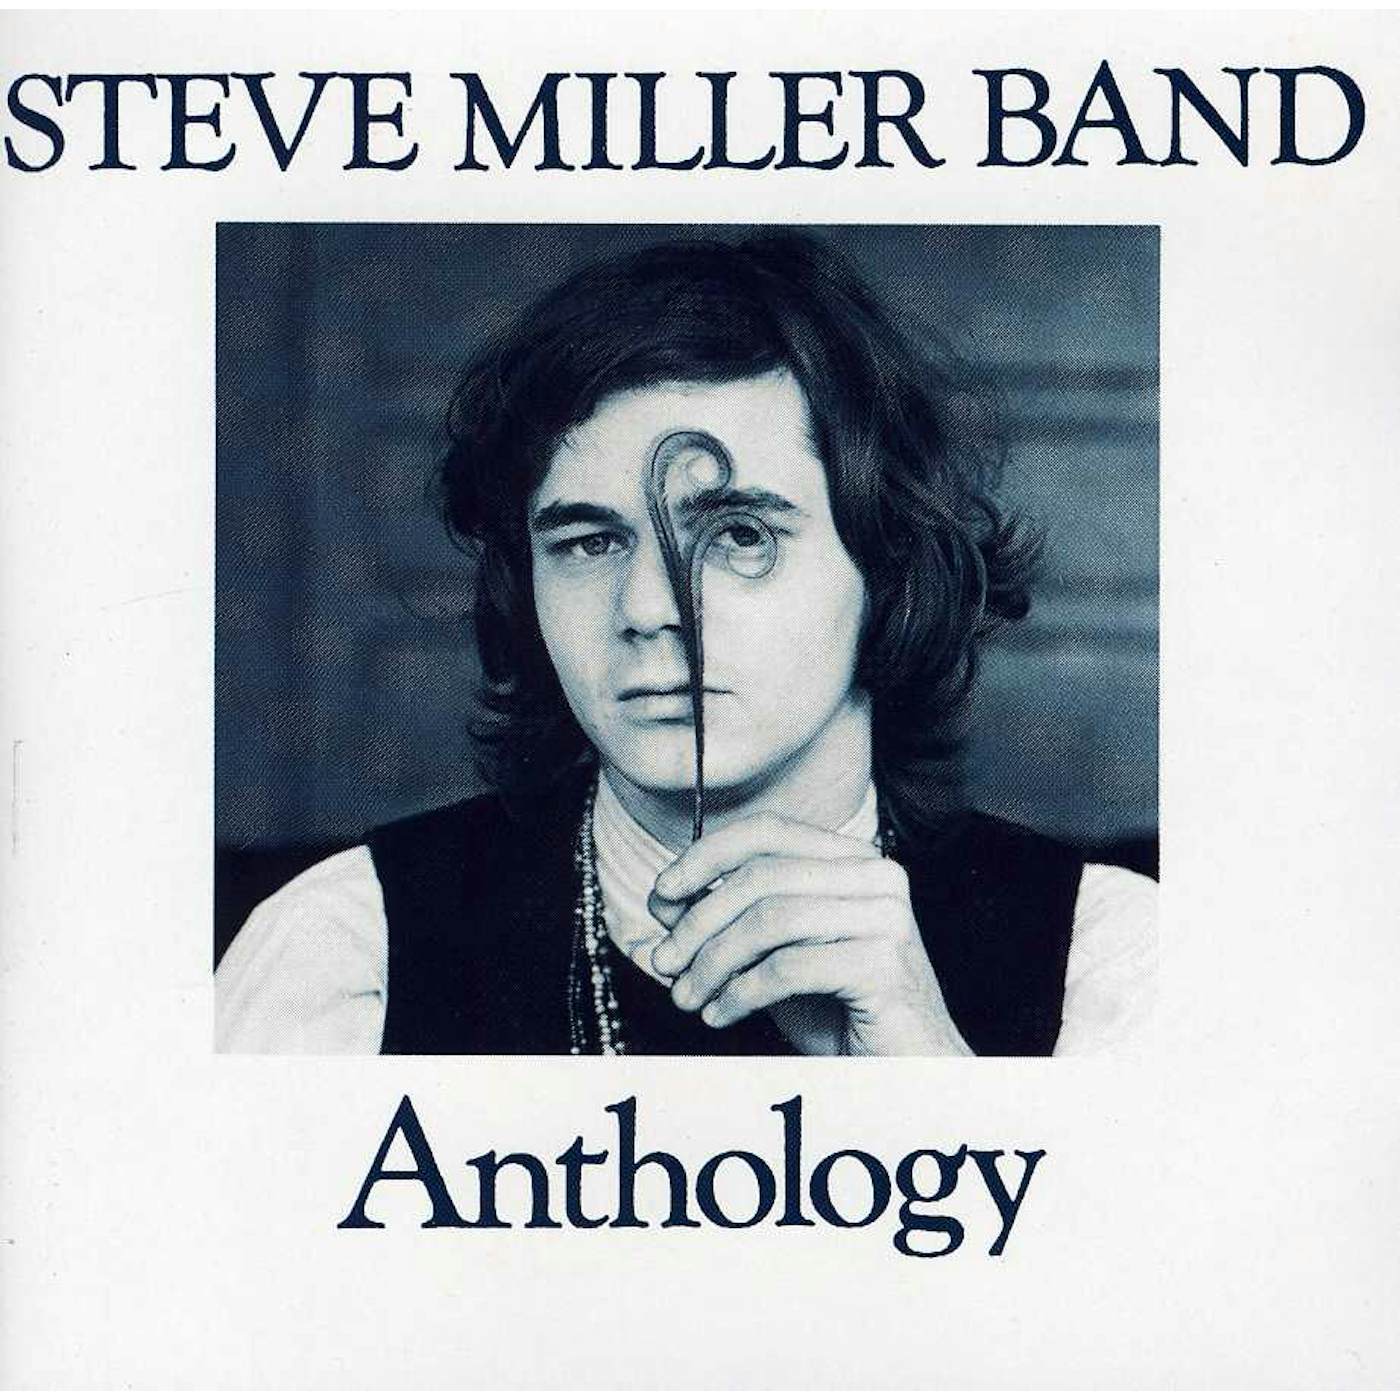 Steve Miller Band ANTHOLOGY CD